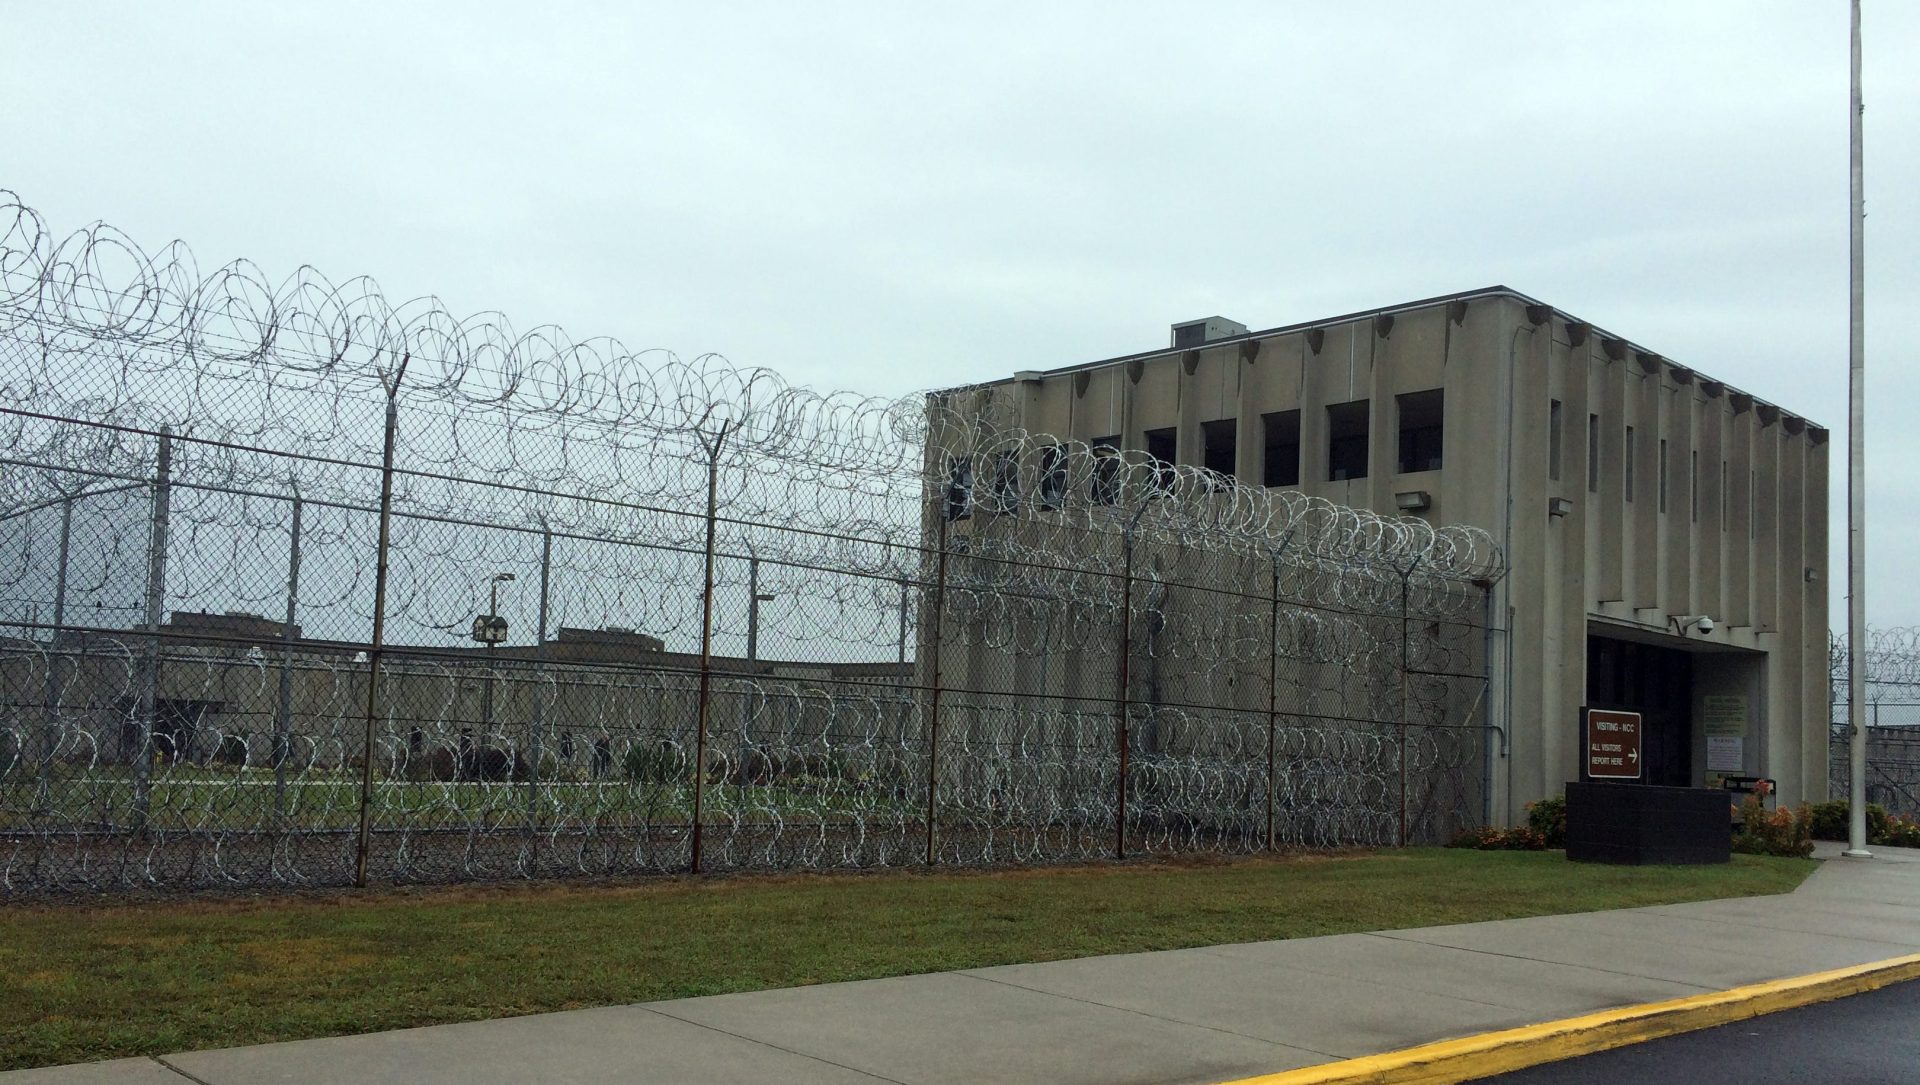 nottoway correctional center